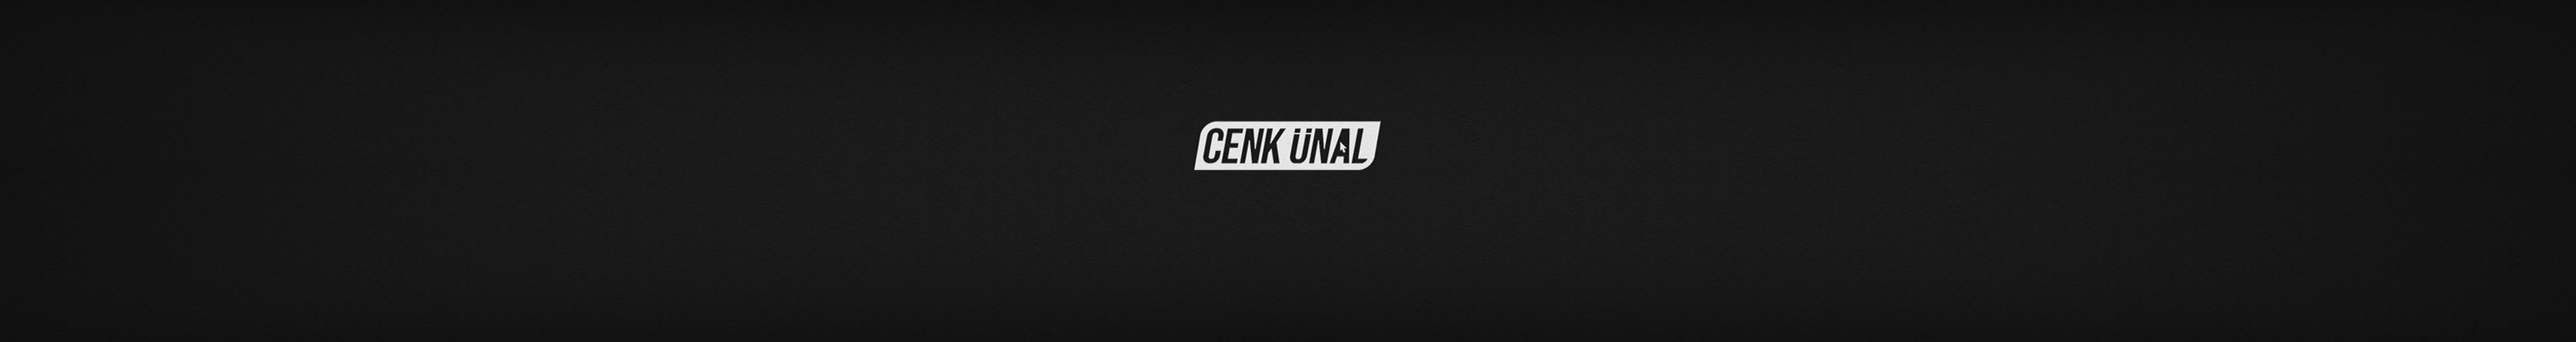 Cenk Ünal's profile banner